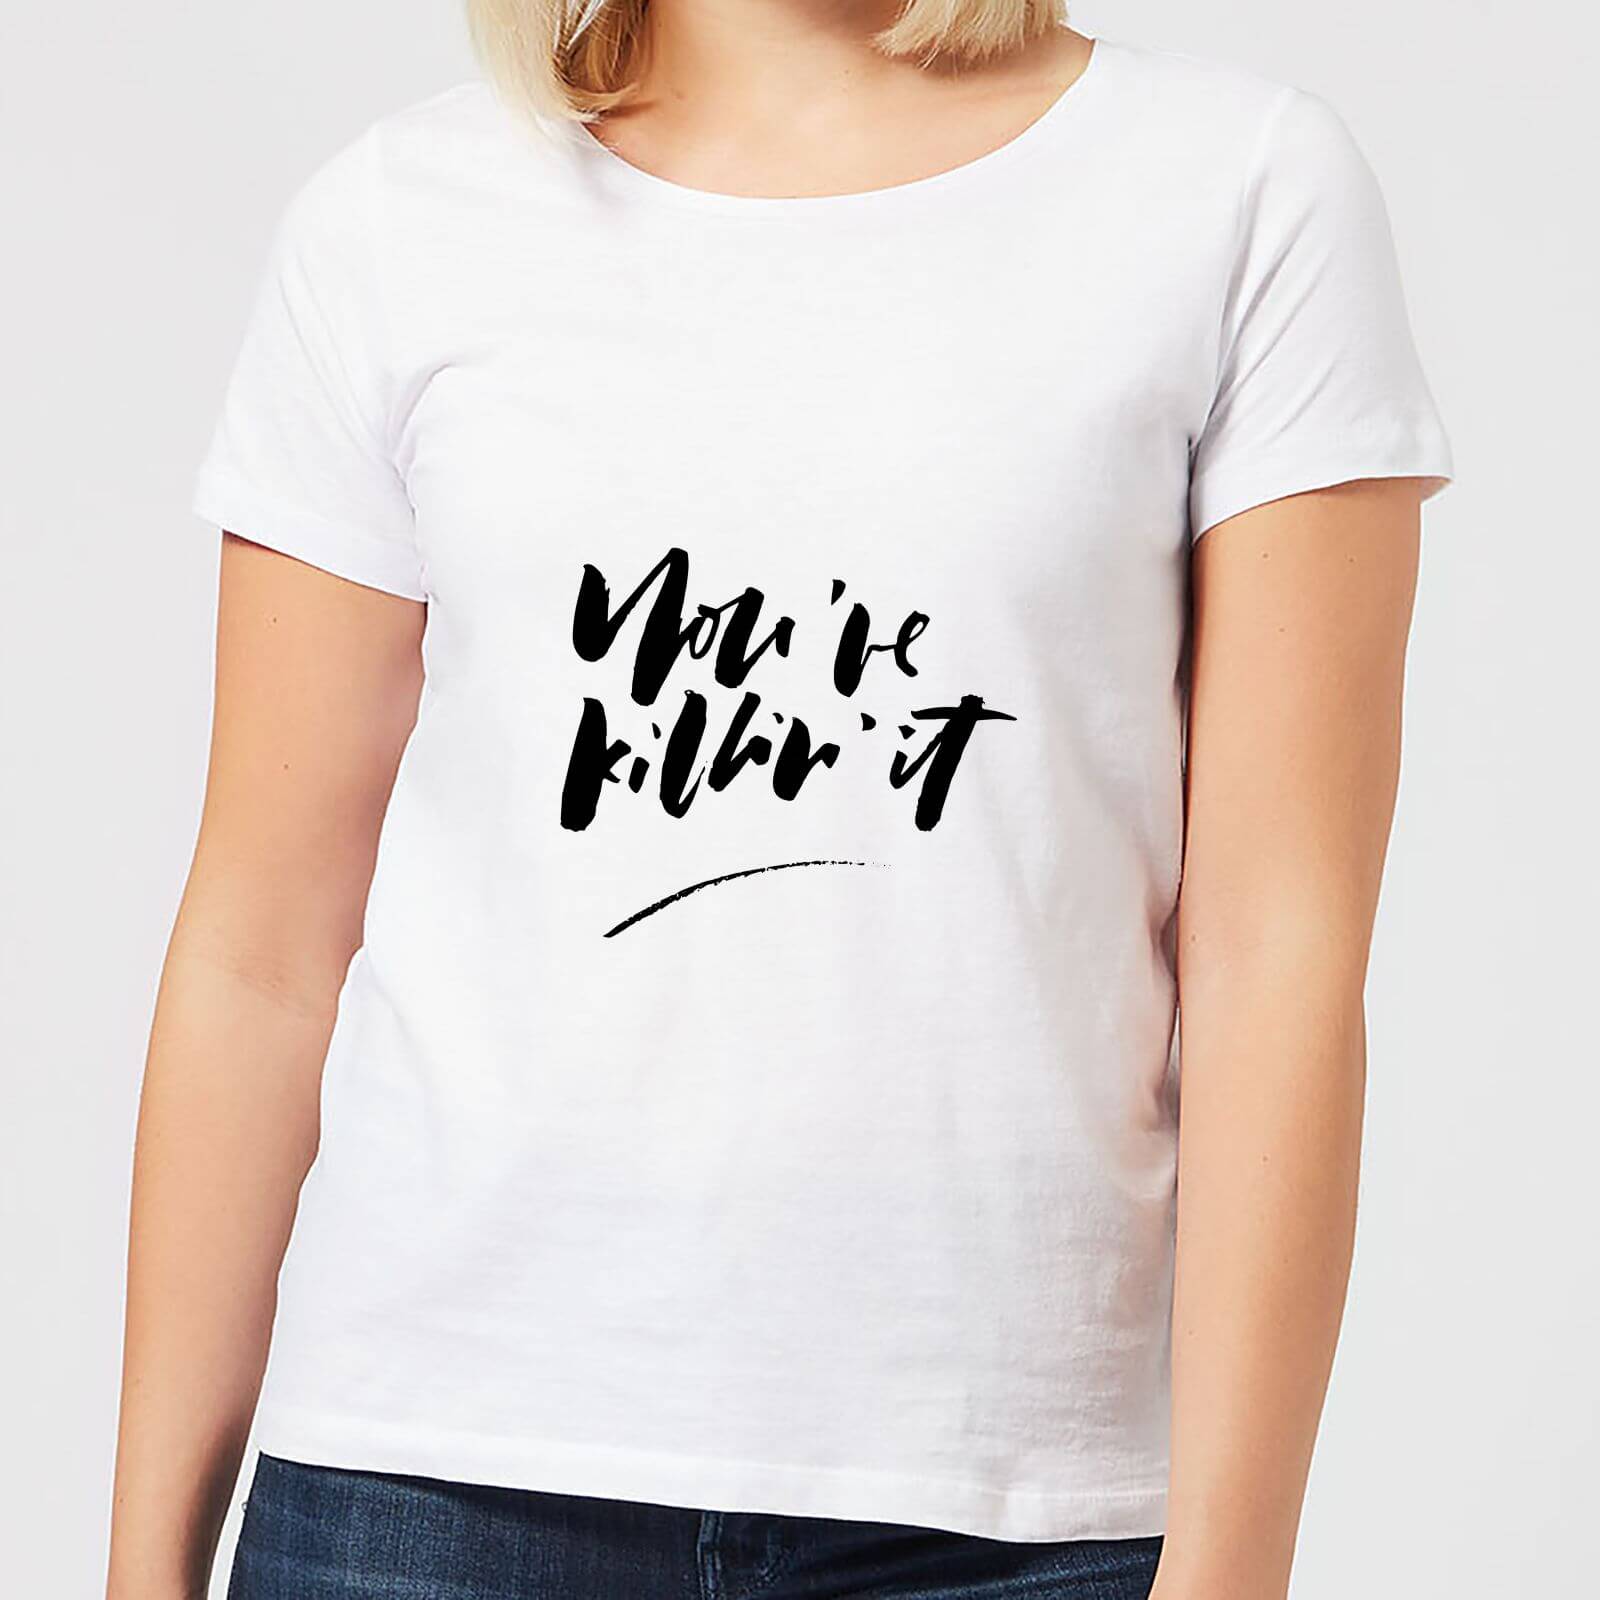 You're Killin' It Women's T-Shirt - White - S - White